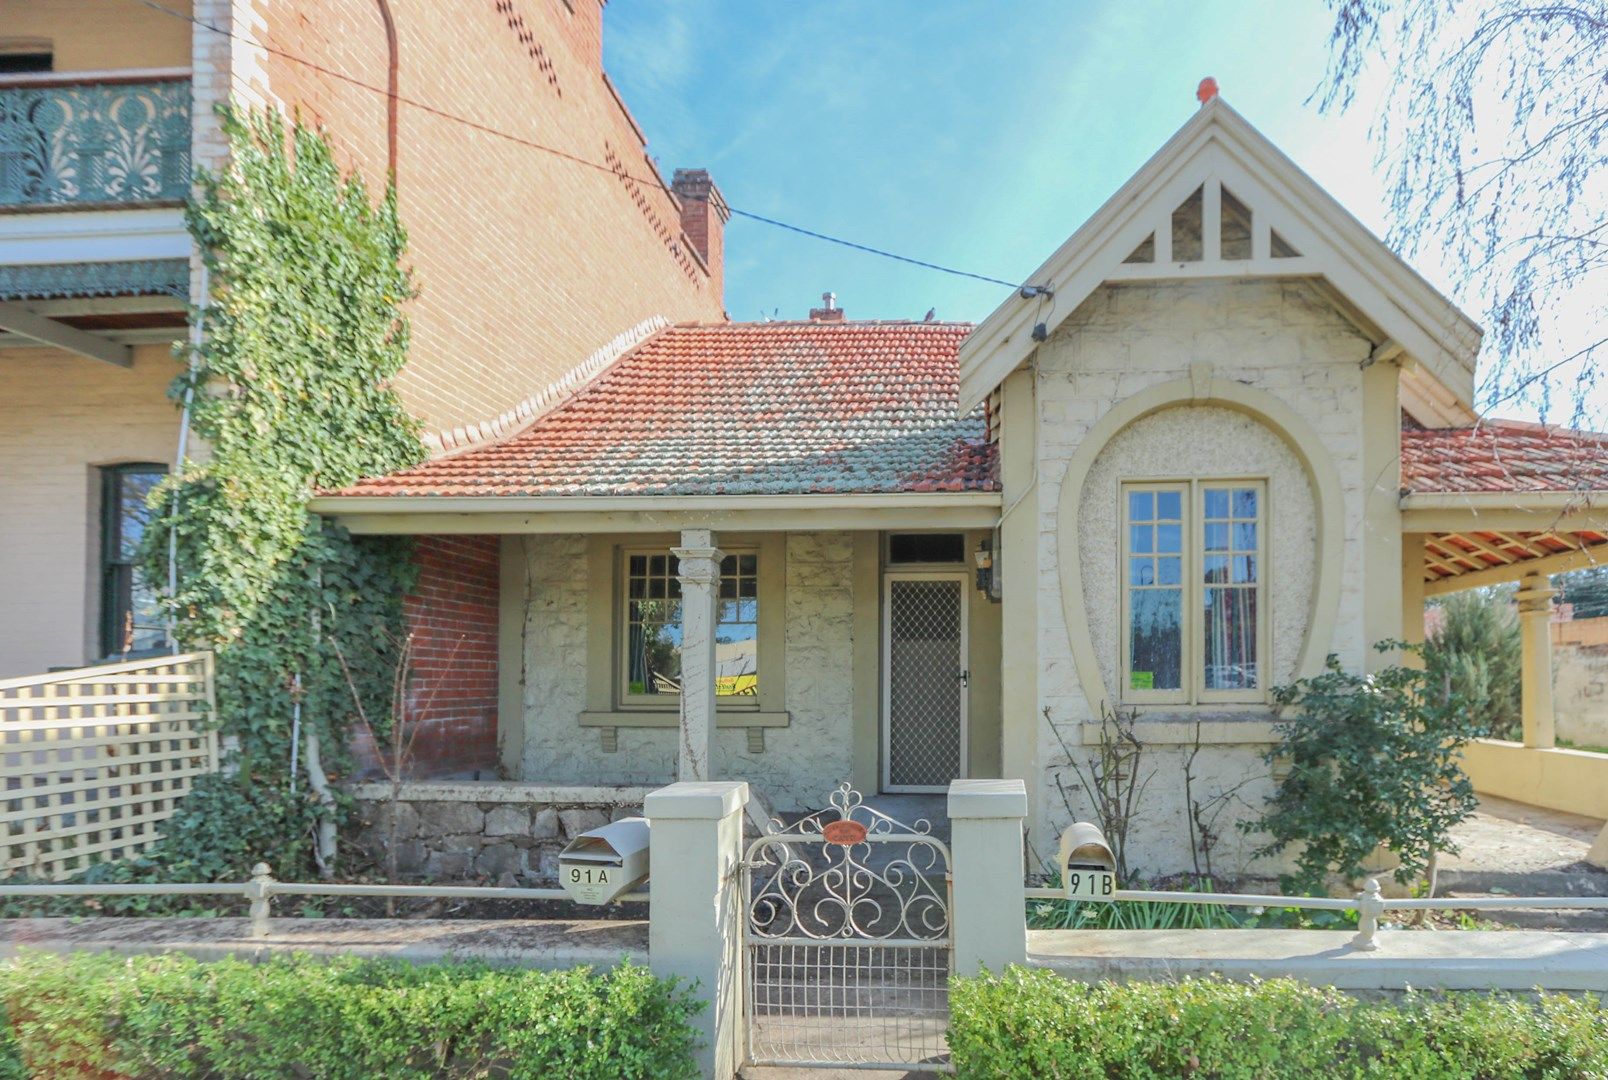 2 bedrooms House in 91A Havannah Street BATHURST NSW, 2795